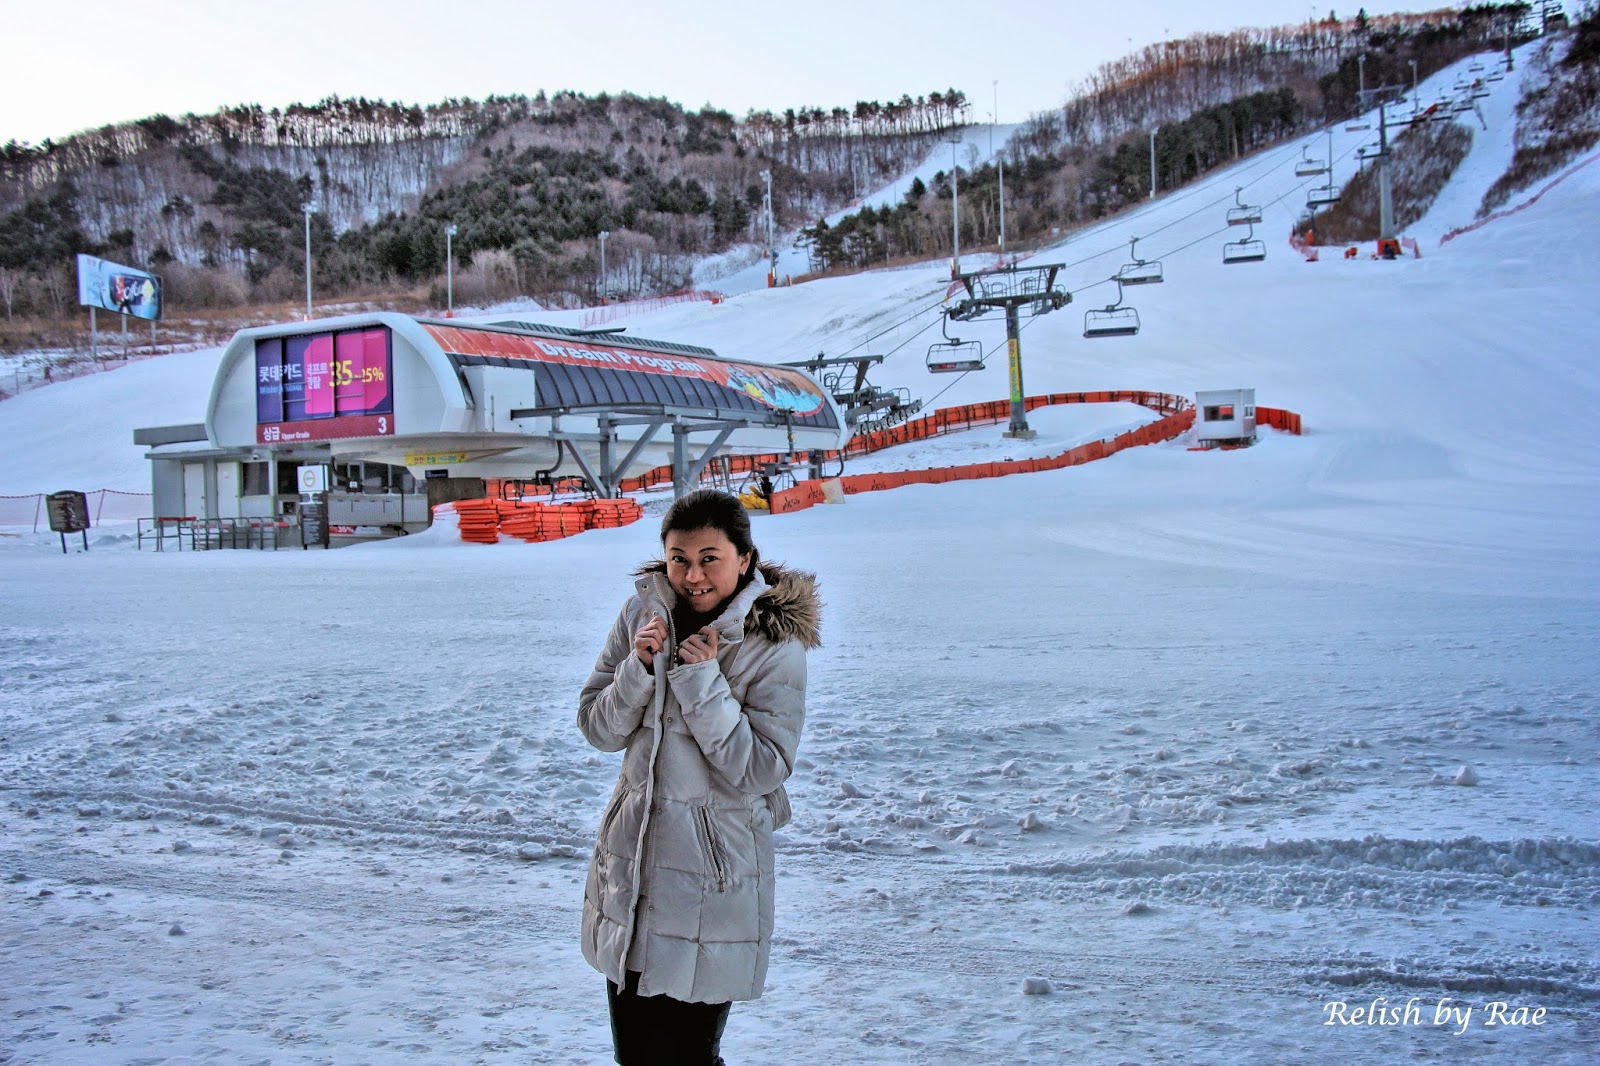 Dynamic Korea in Winter Day 6 - Lotte World and Dongdaemun 